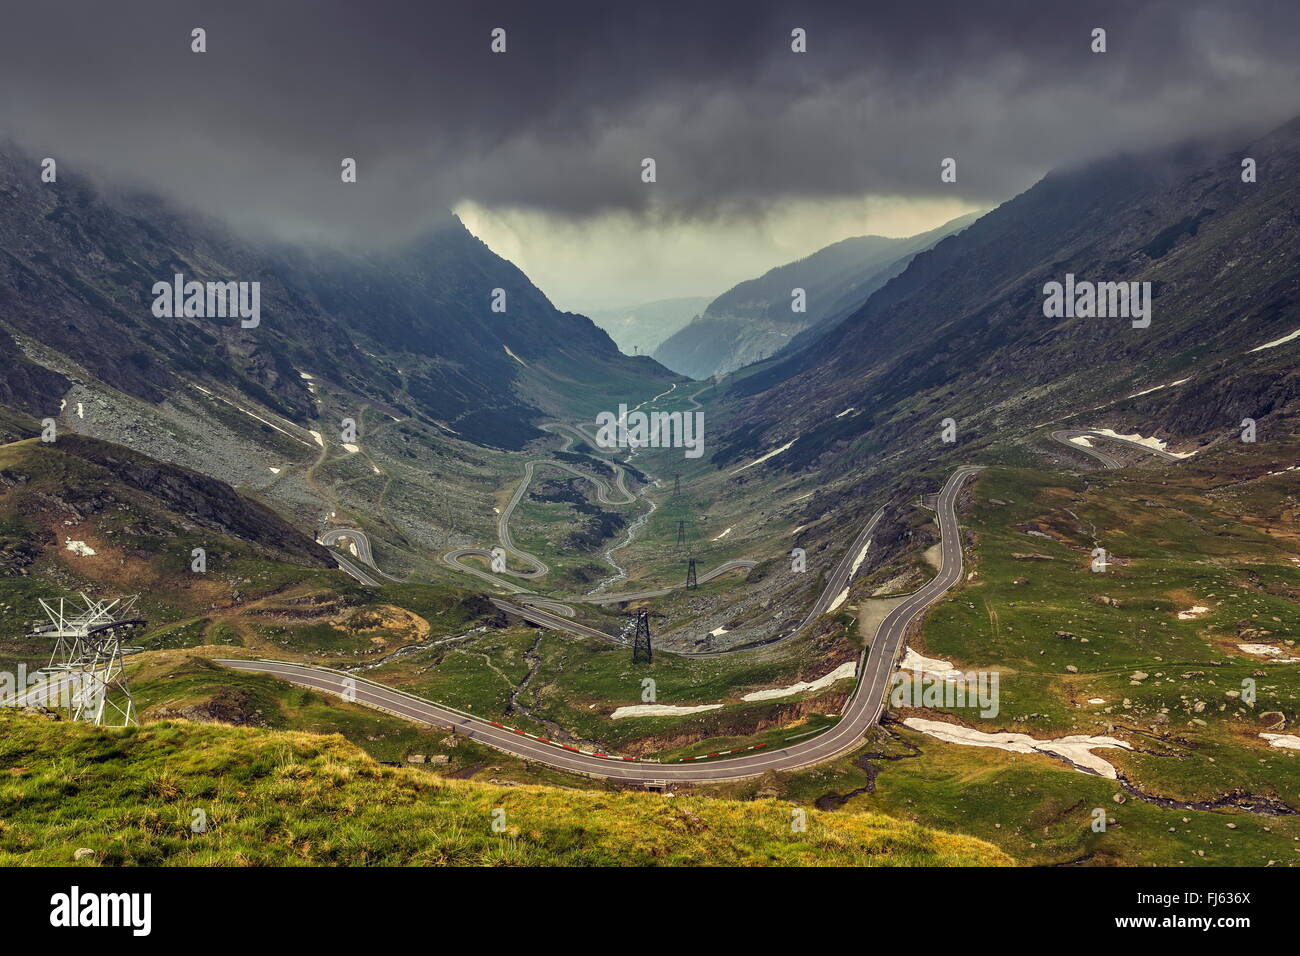 Stormy mountain landscape with famous sinuous Transfagarasan road in Fagaras mountains, Romania. Stock Photo